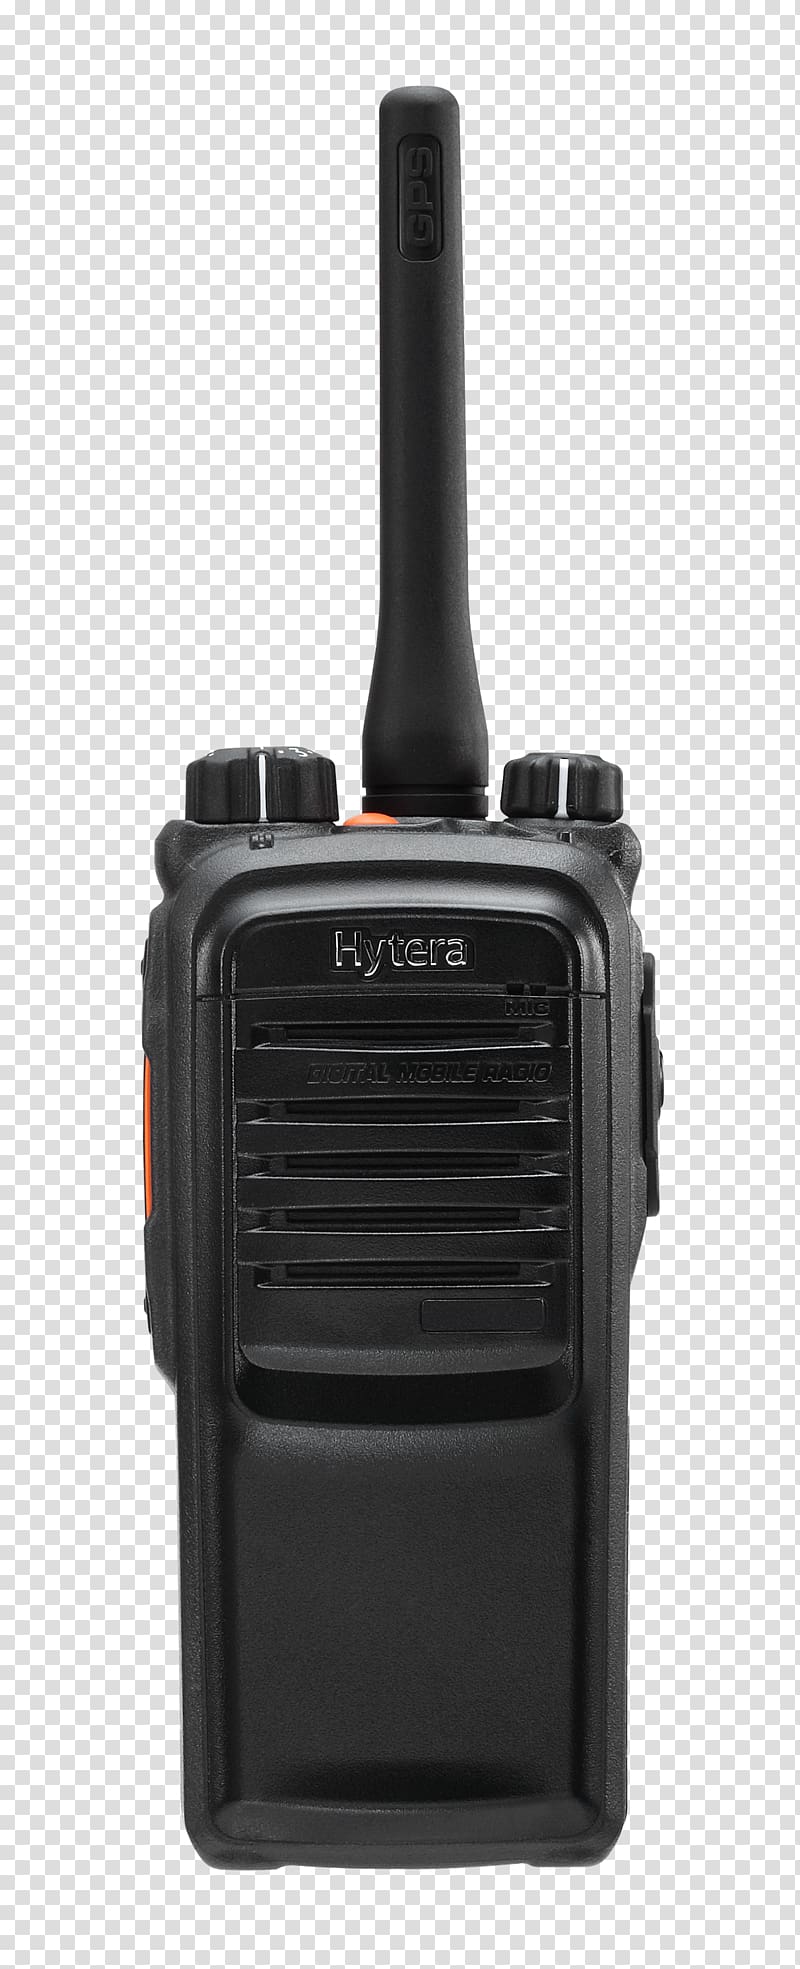 Handheld Two-Way Radios Hytera Digital mobile radio Radio station, hytera transparent background PNG clipart